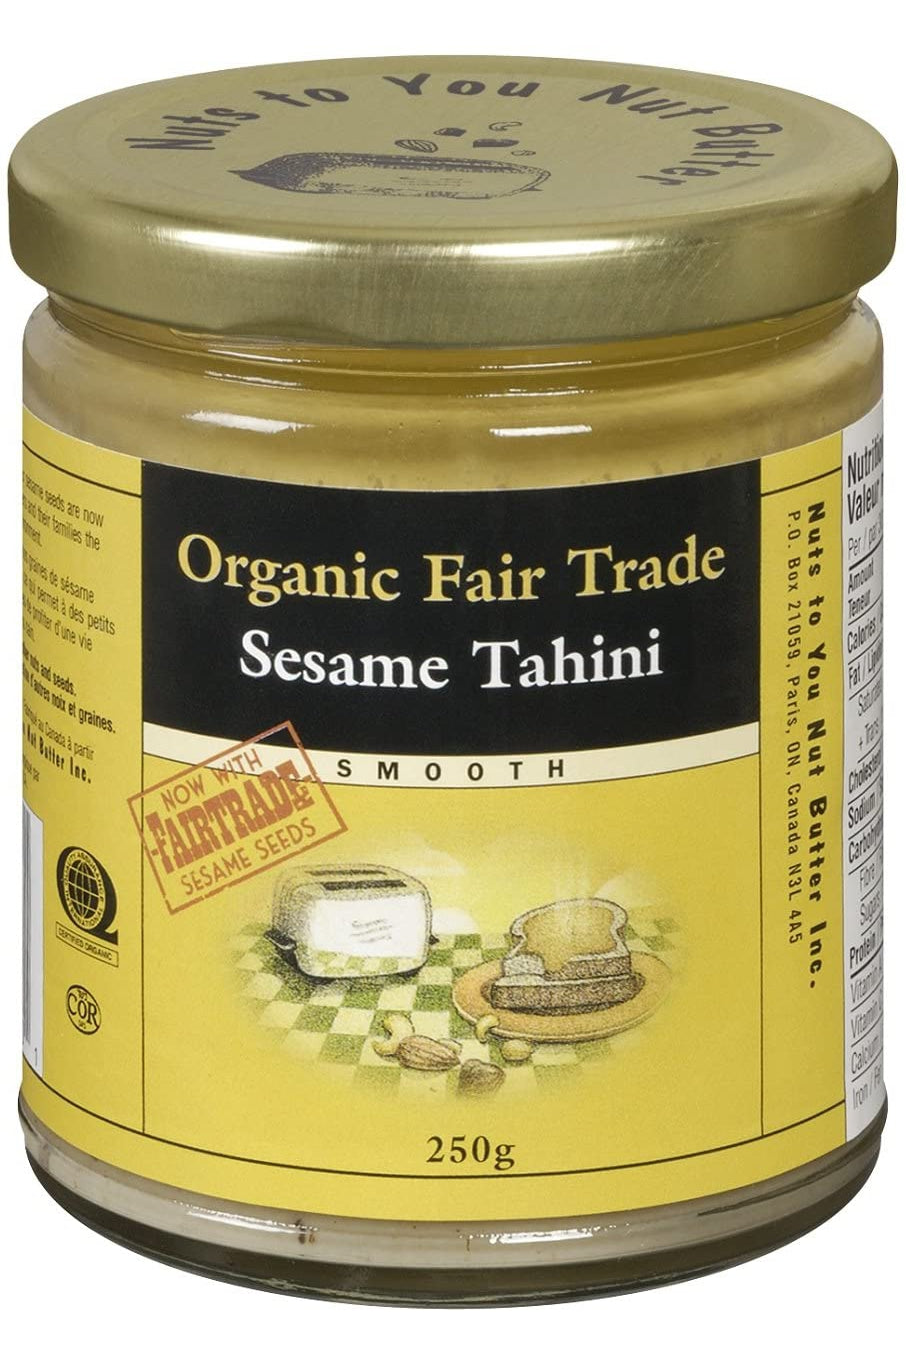 Nuts to You Organic Fair Trade Sesame Tahini - Smooth 250g